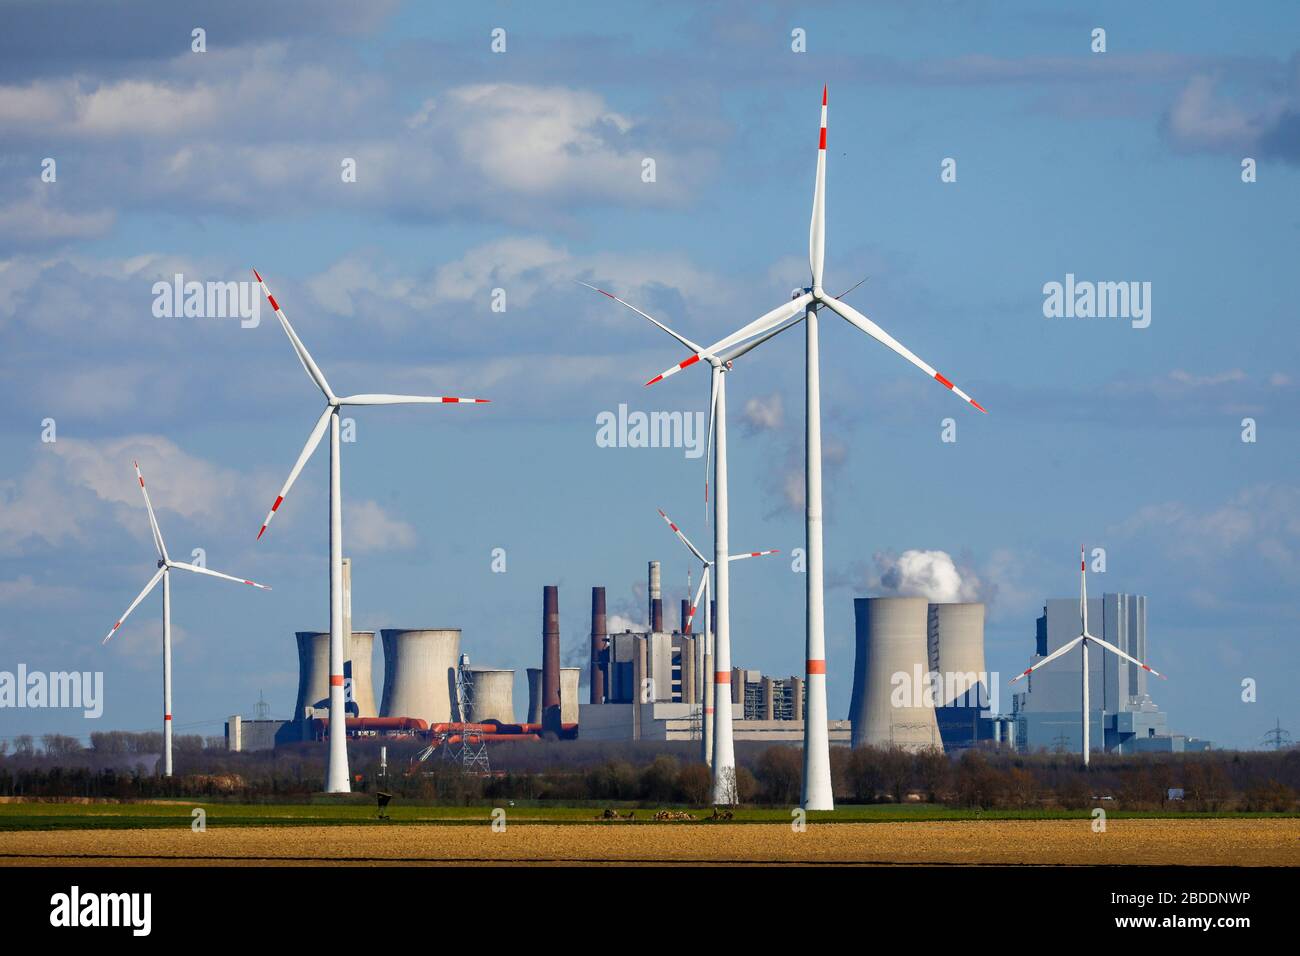 12.03.2020, Grevenbroich, North Rhine-Westphalia, Germany - Wind farm at RWE power plant Neurath, lignite power plant at RWE lignite opencast mine Gar Stock Photo